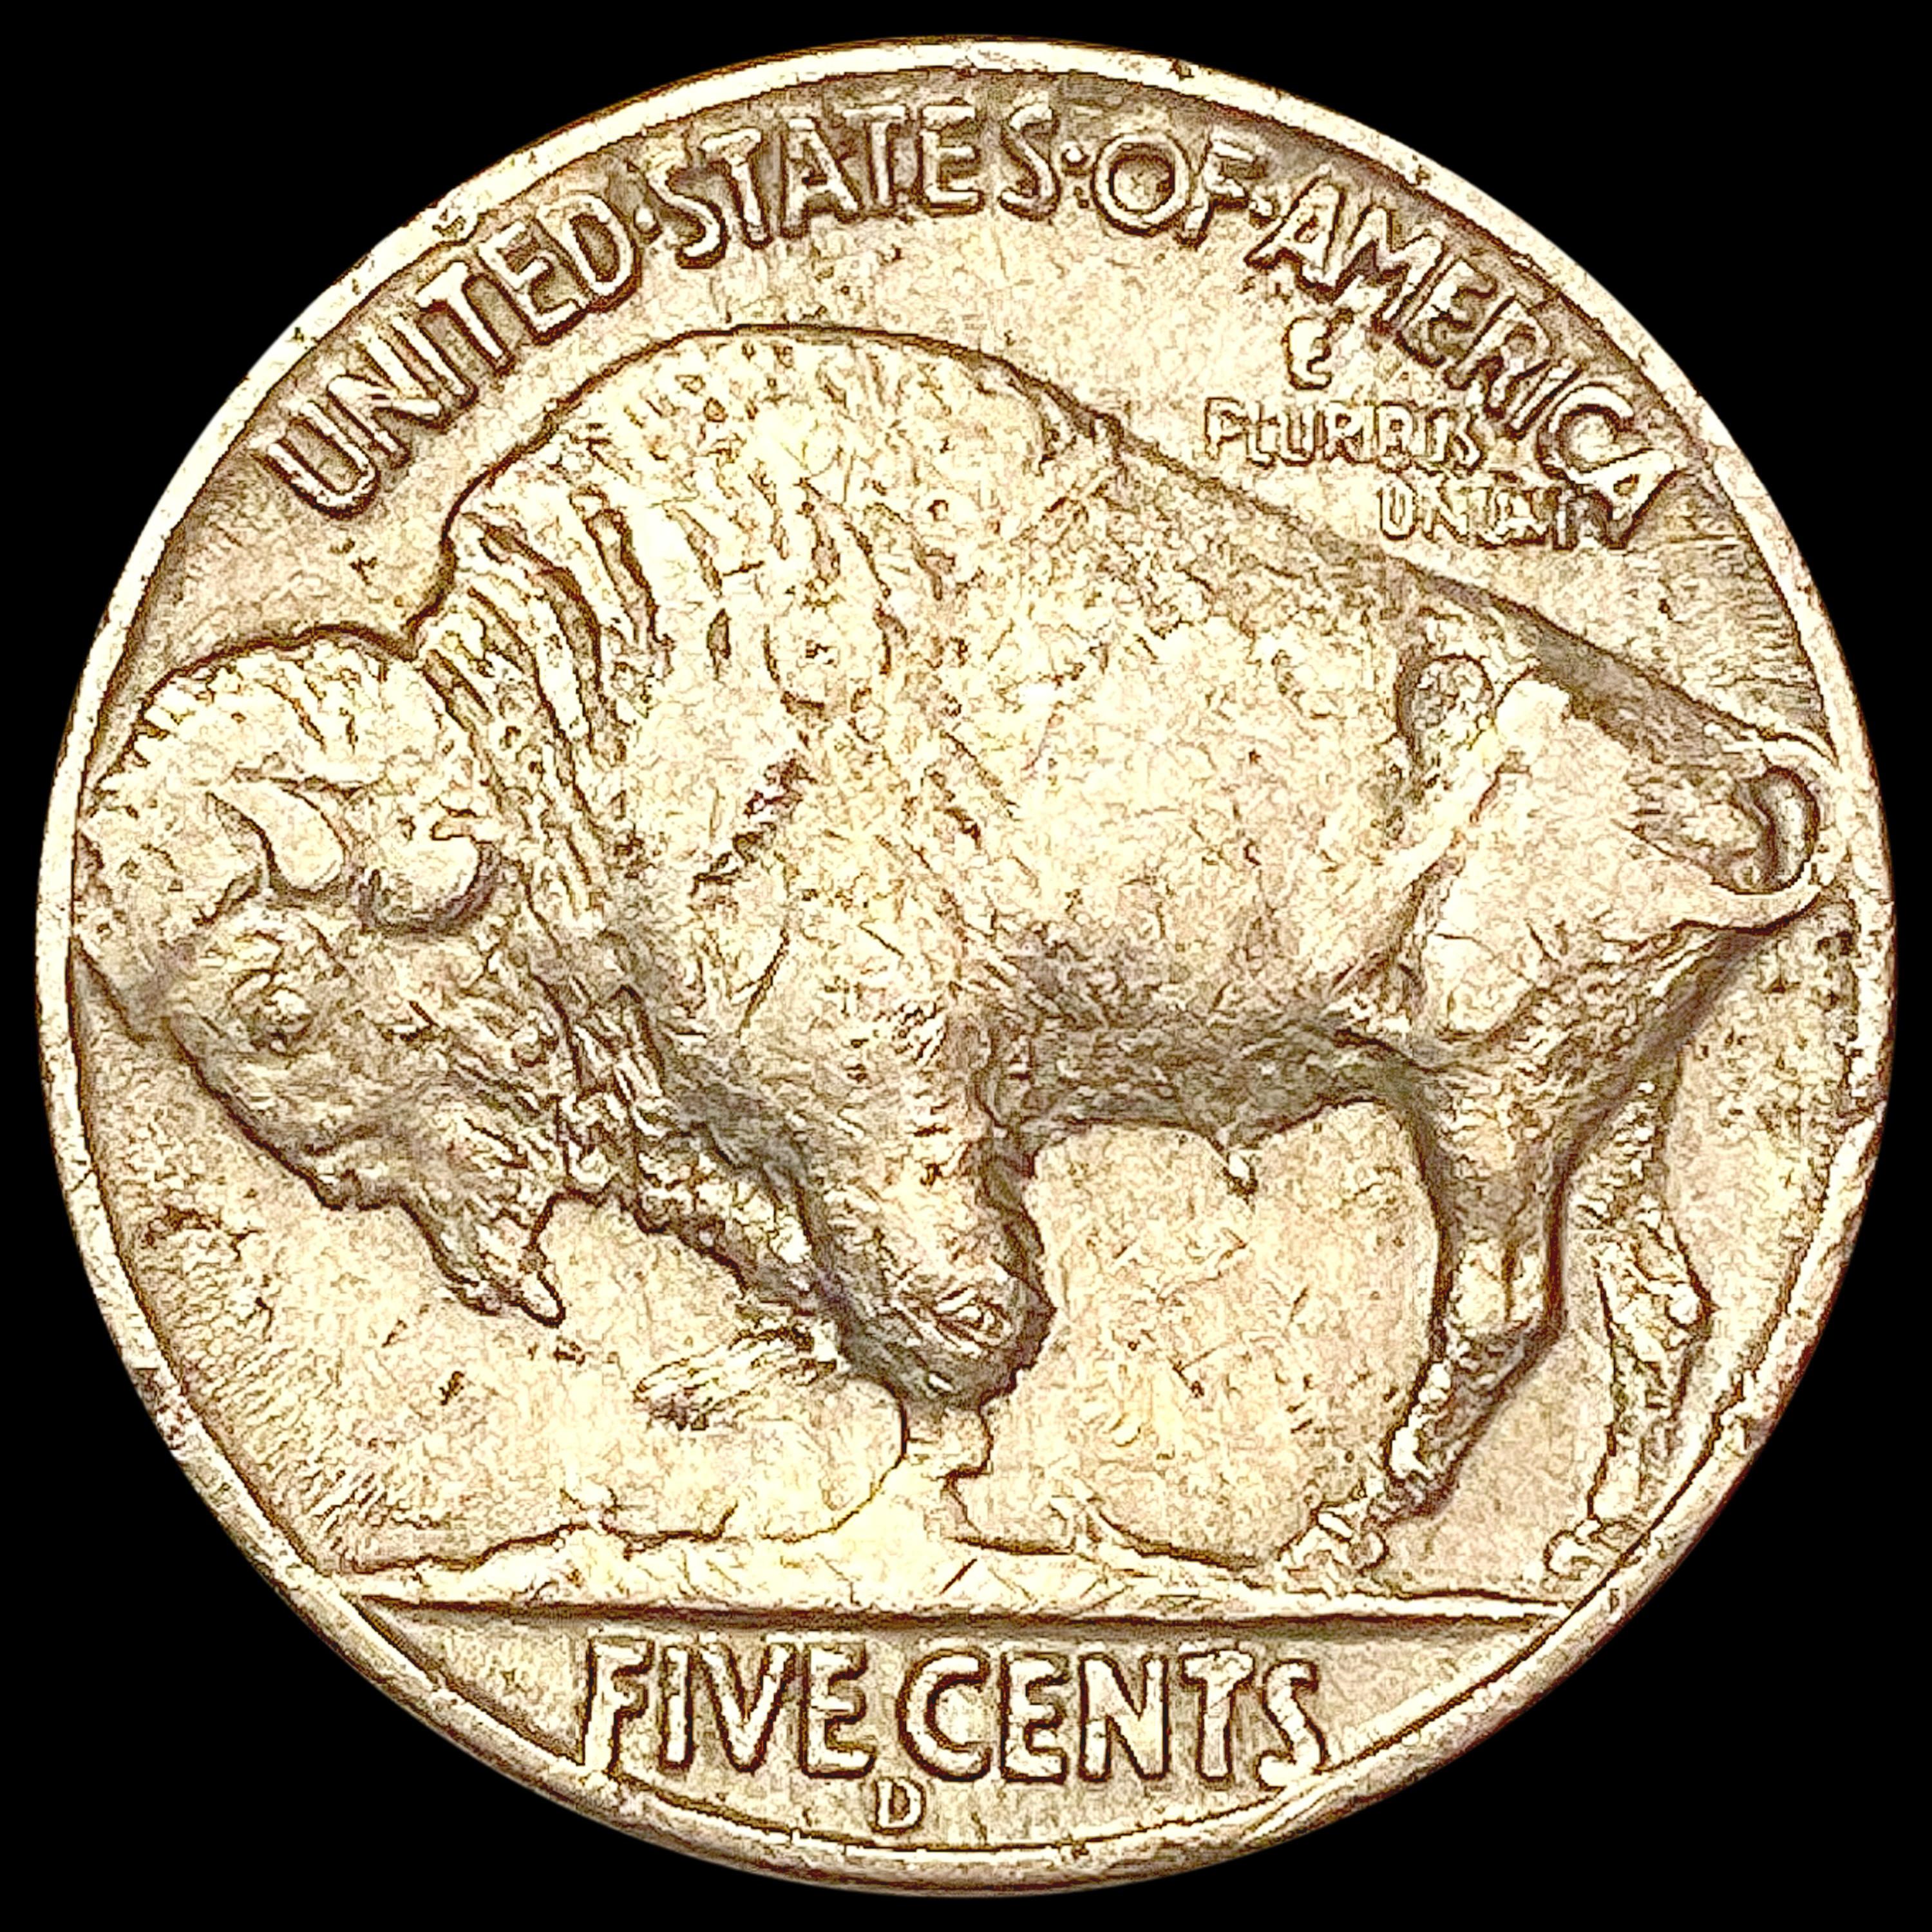 1937-D 3-Leg Buffalo Nickel NEARLY UNCIRCULATED